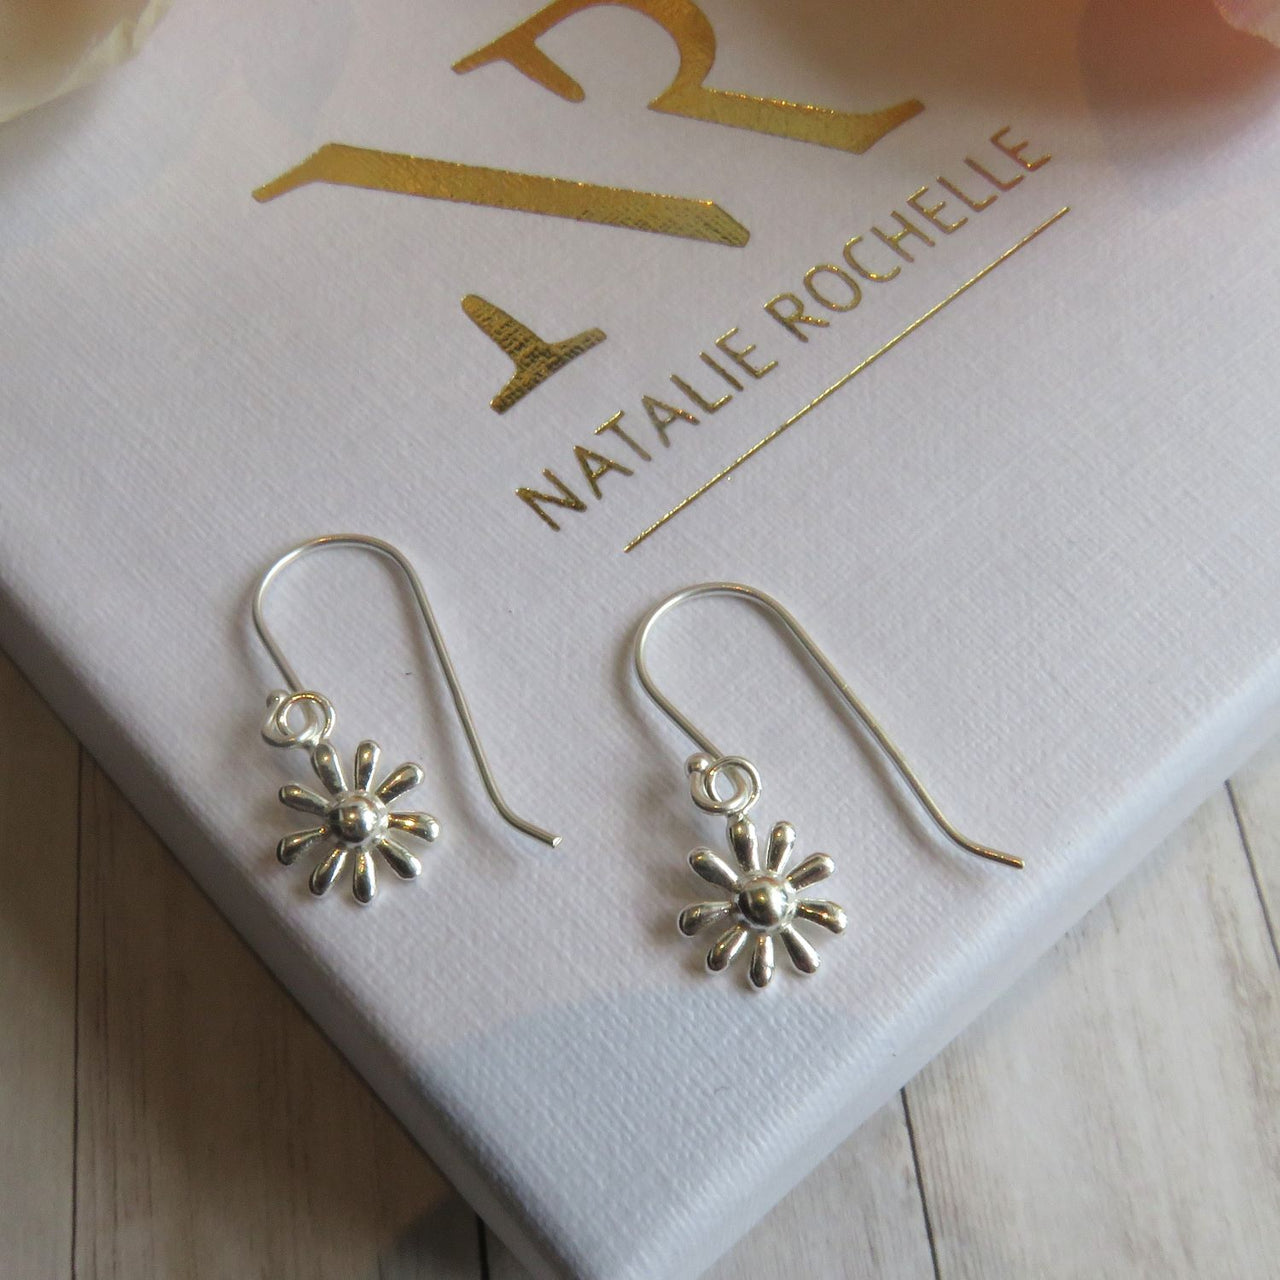 Sterling Silver 925 daisy hanging earrings